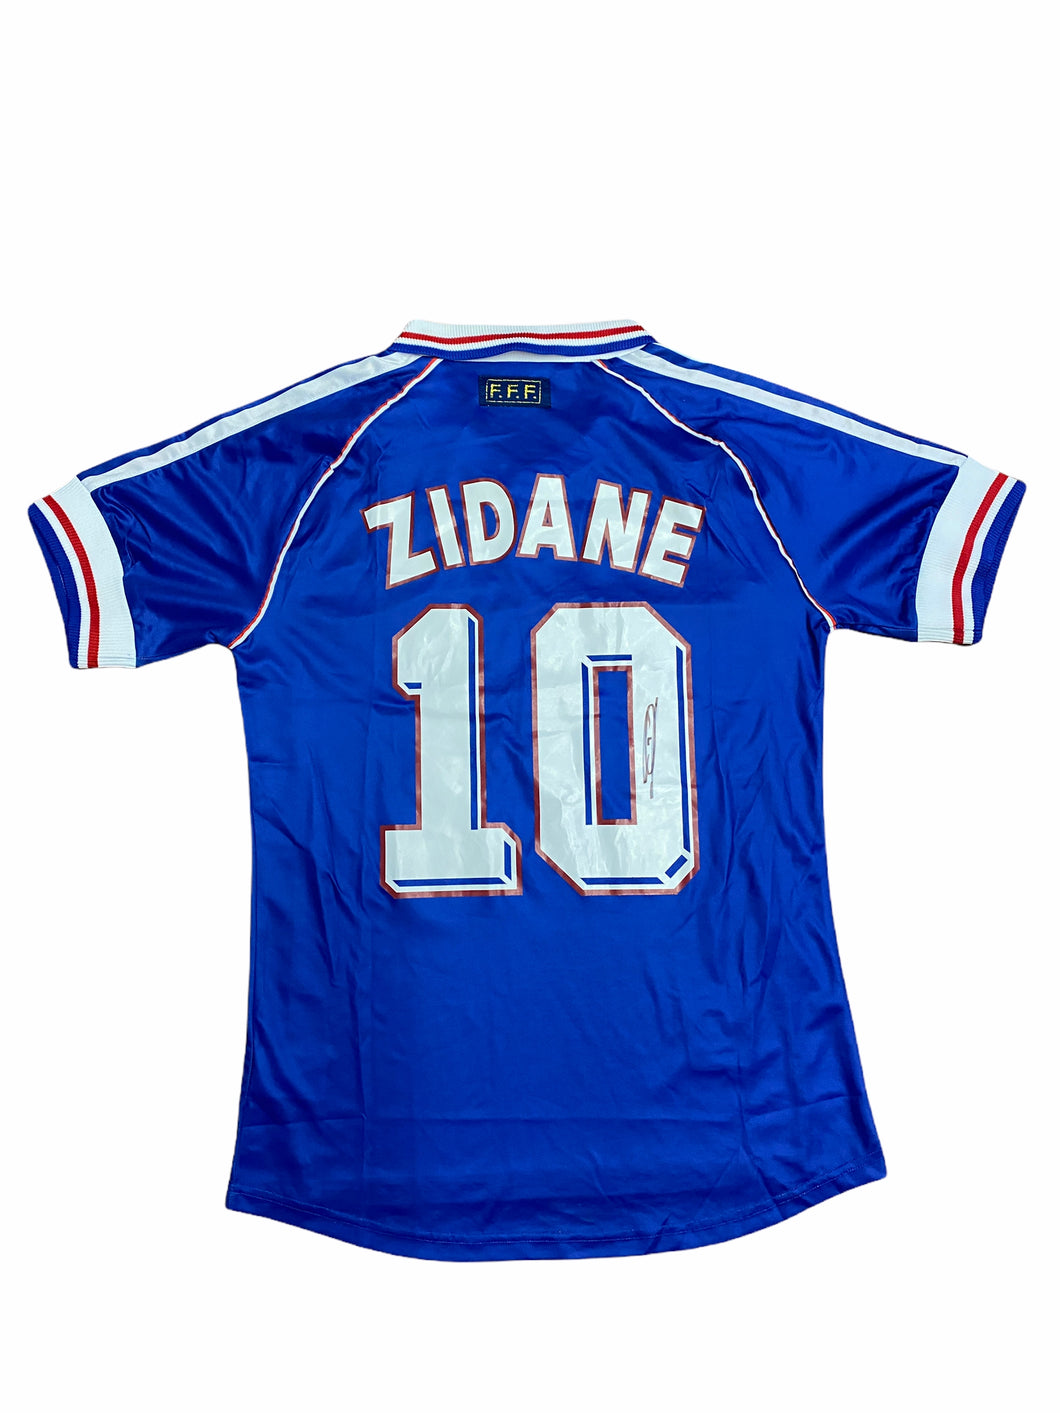 Jersey / Francia / Zidane (azul 1998)